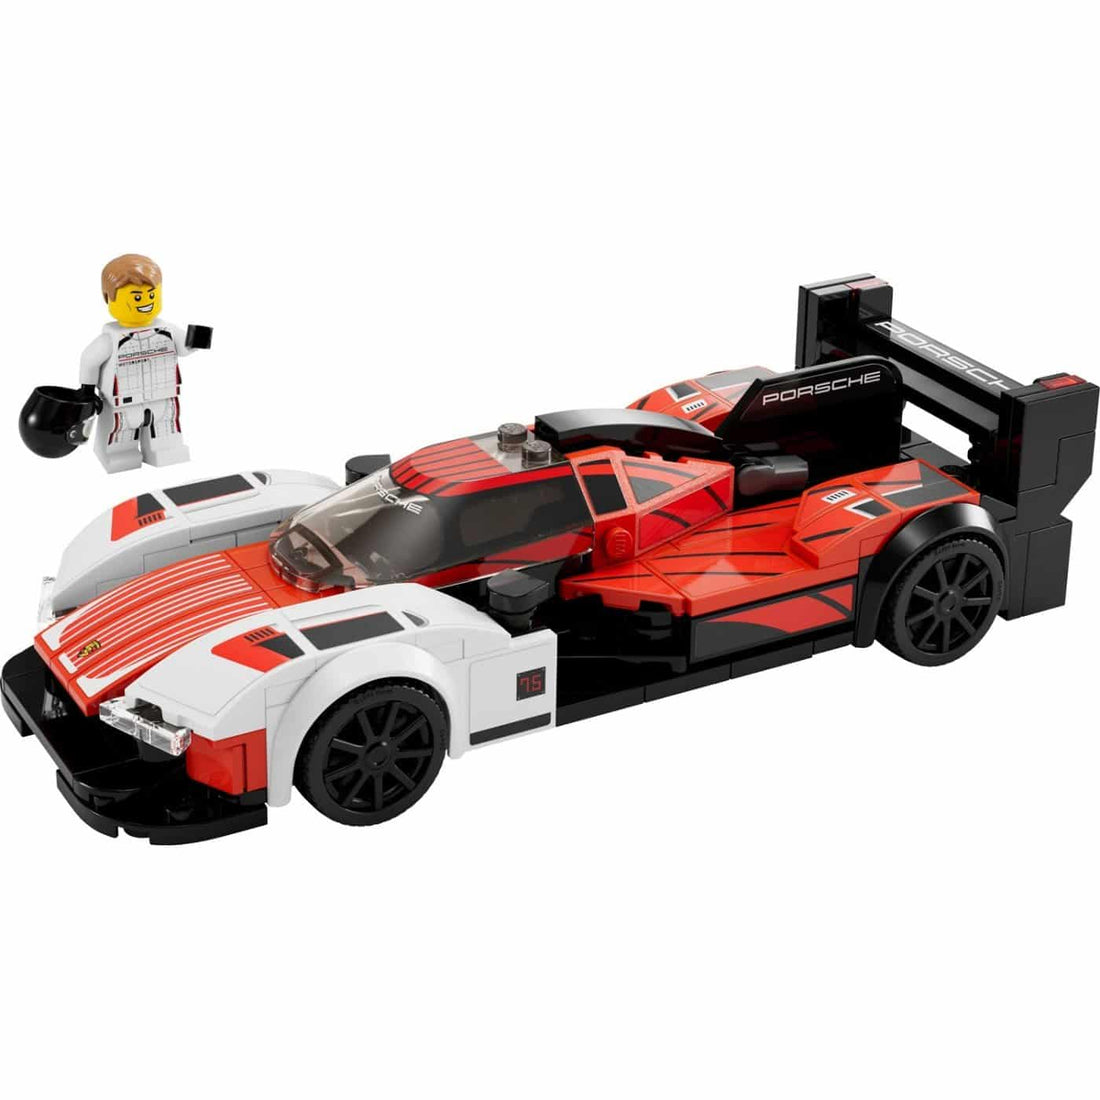 76916 Lego Speed Champions Porche 963